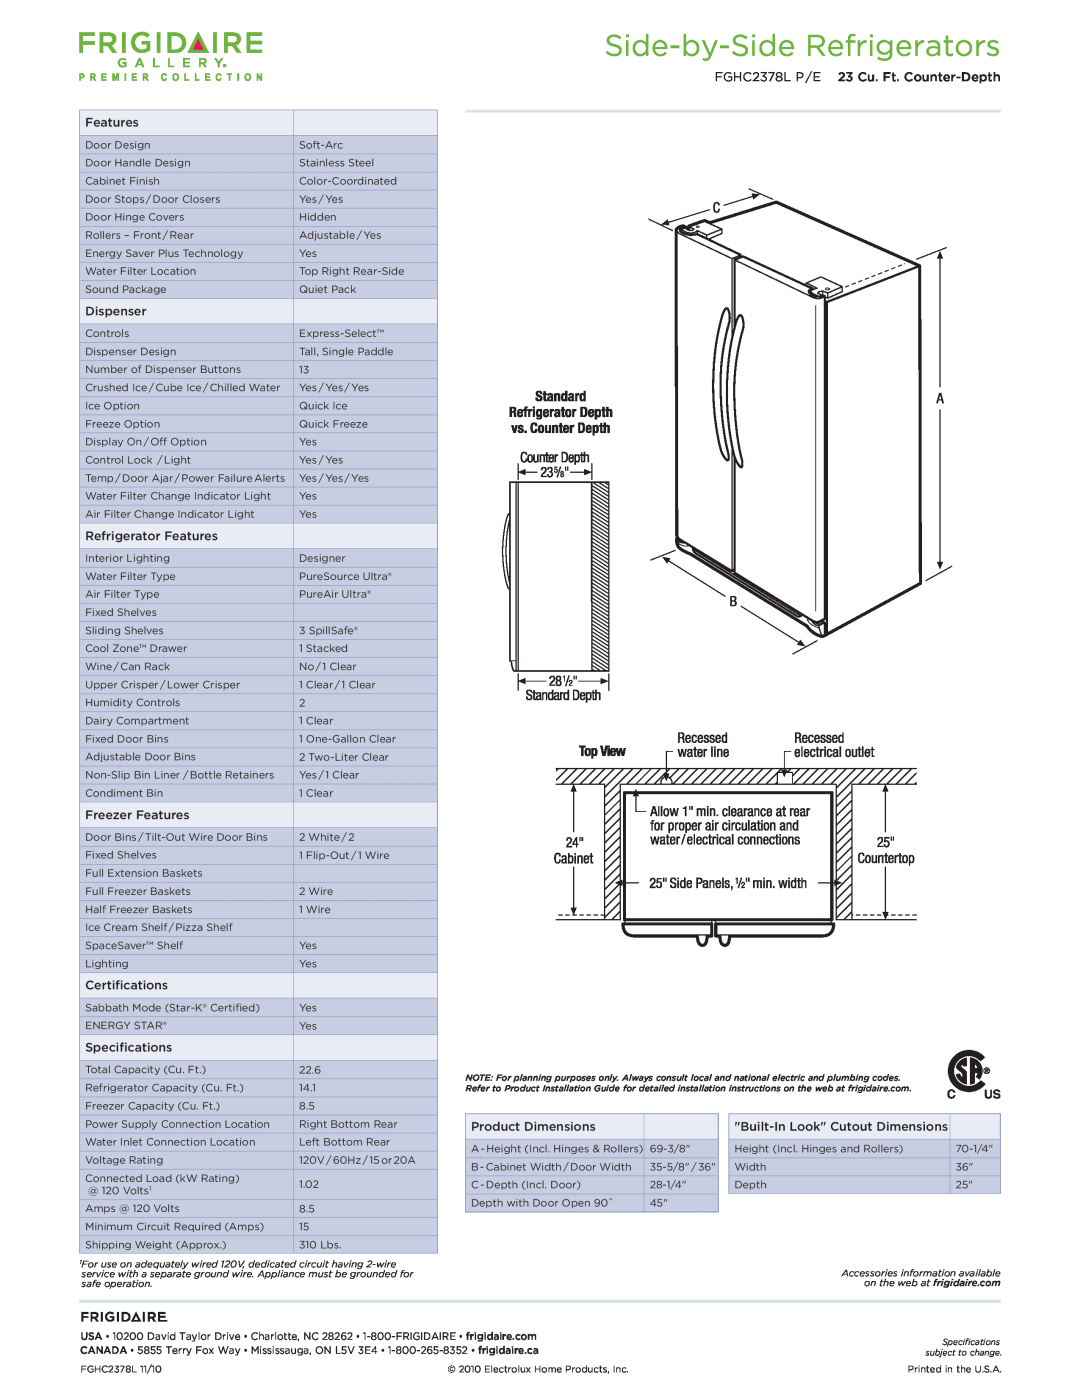 Frigidaire dimensions Side-by-SideRefrigerators, FGHC2378L P /E 23 Cu. Ft. Counter-Depth 